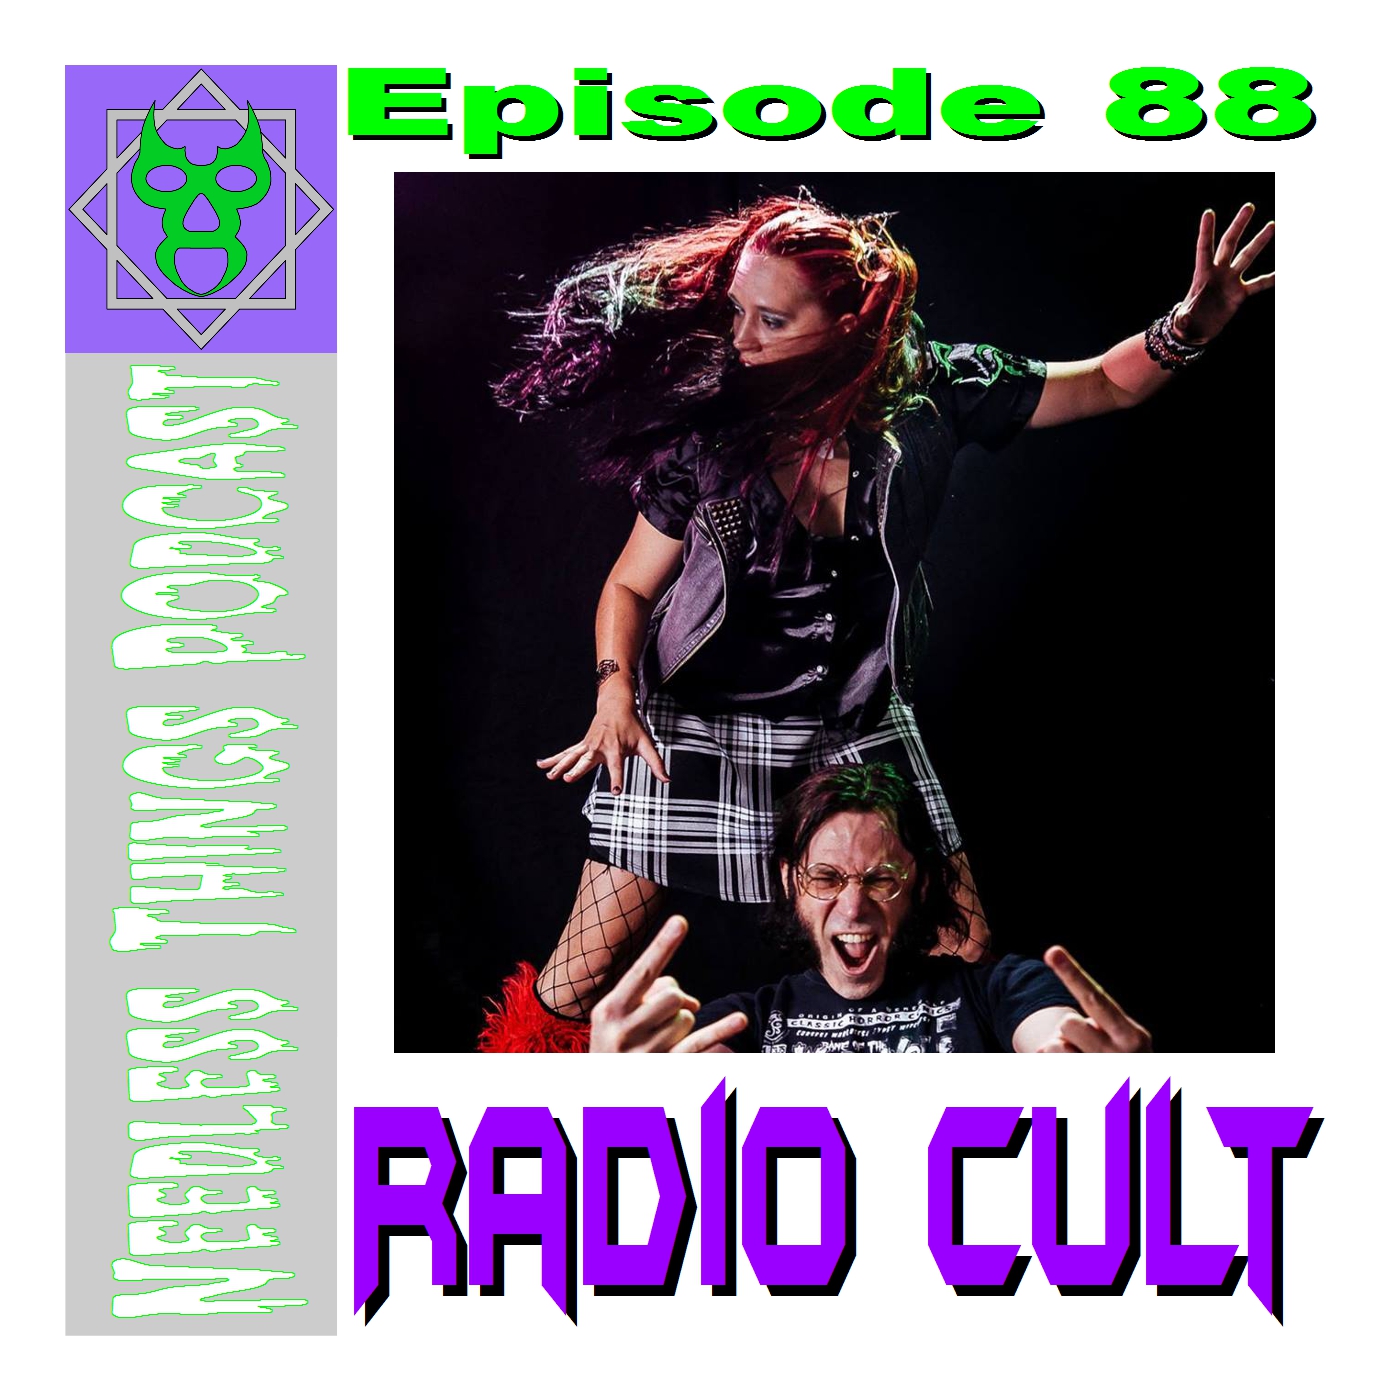 Needless Things Podcast 88 – Radio Cult!